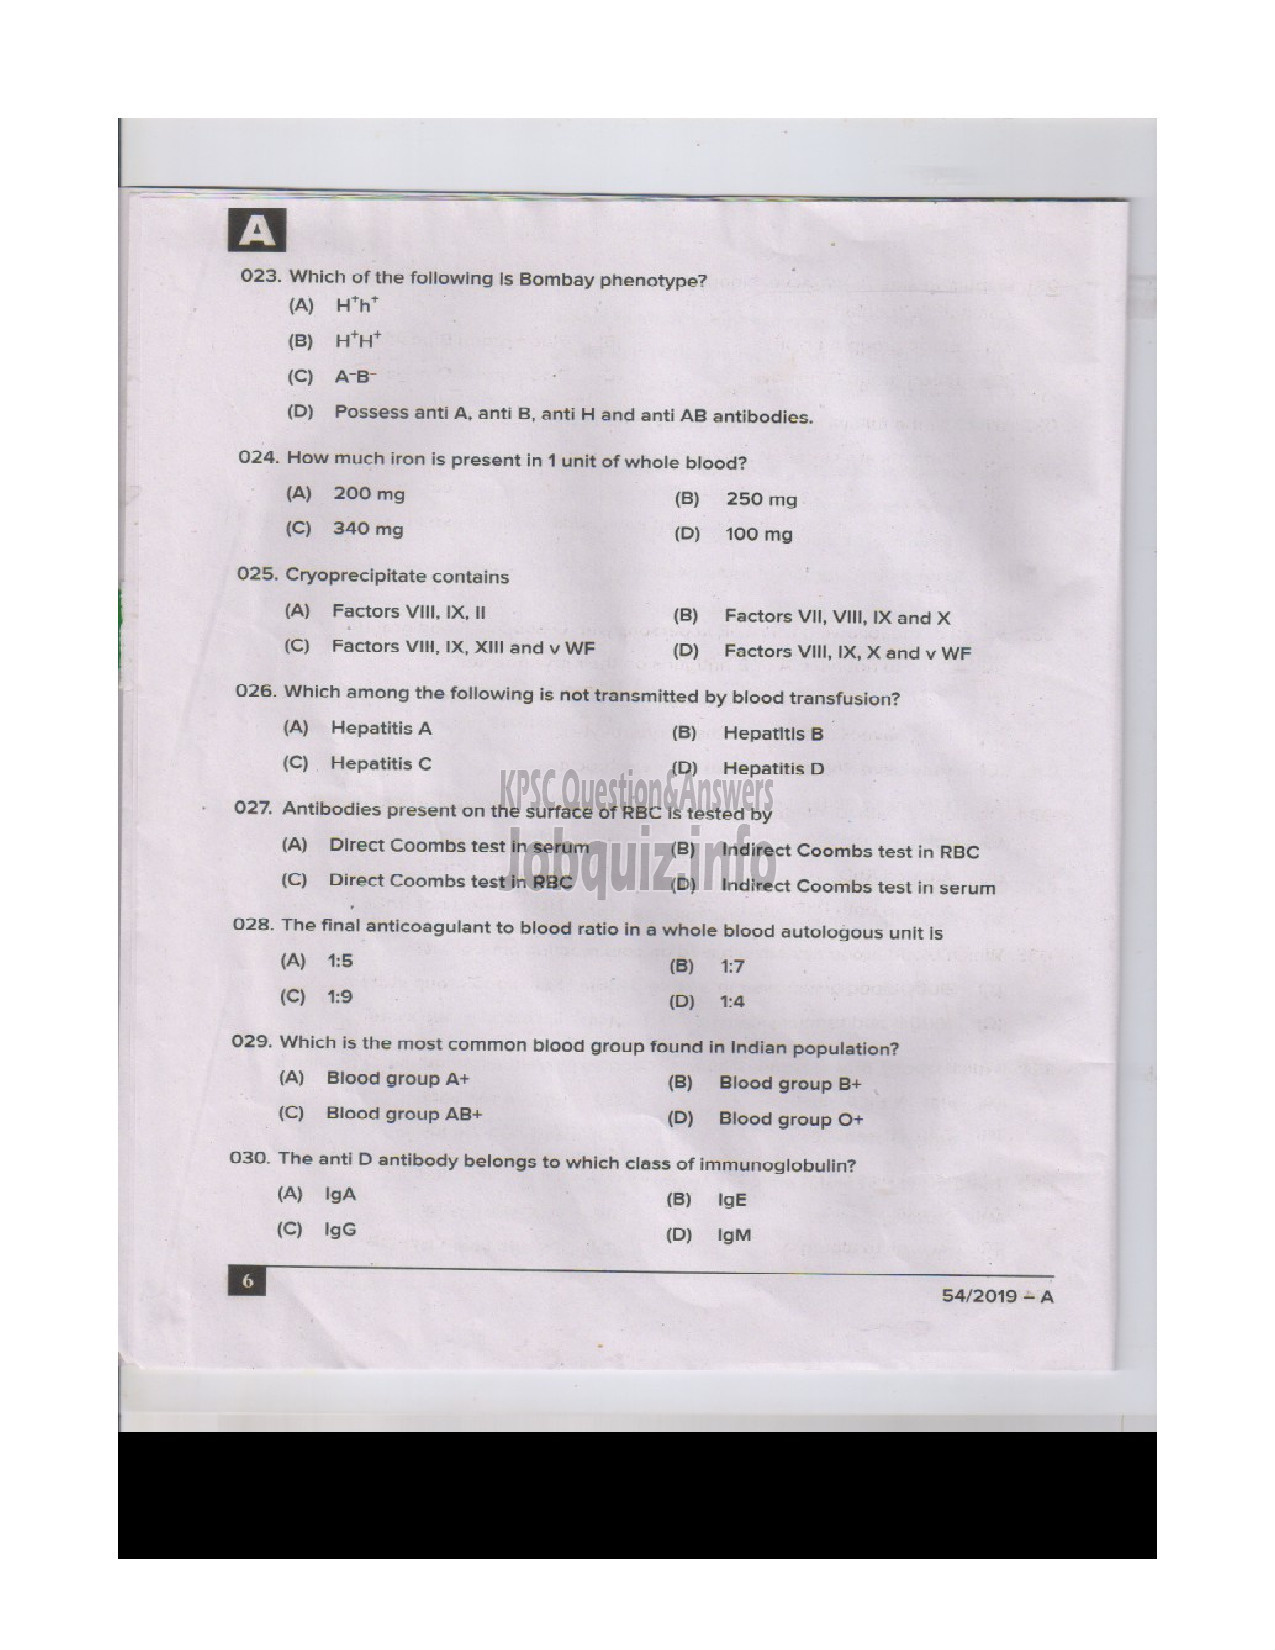 Kerala PSC Question Paper - BLOOD BANK TECHNICIAN HEALTH SERVICES ENGLISH -6